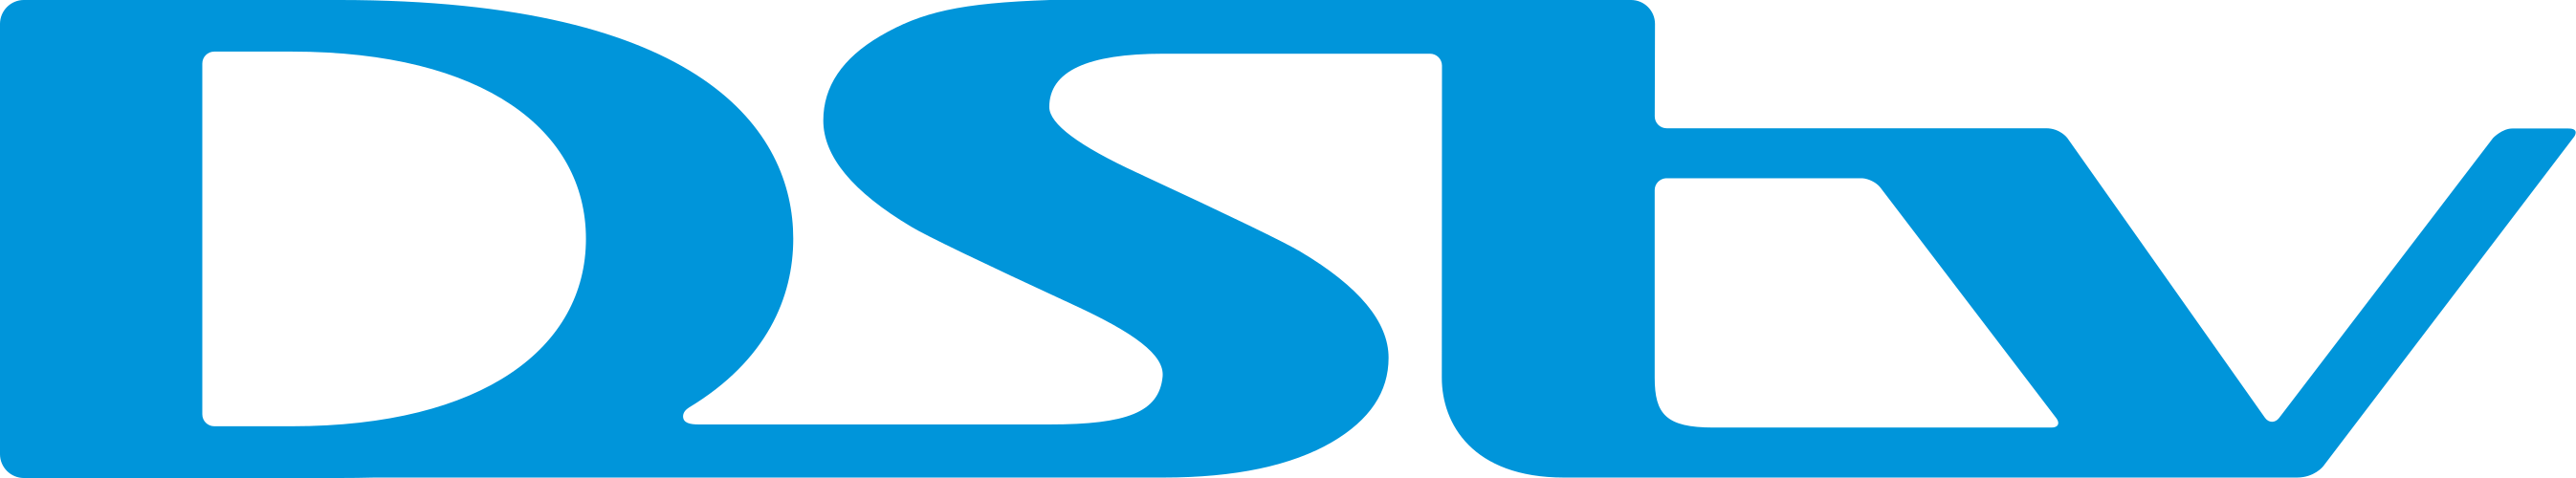 DStv_2012_logo.svg